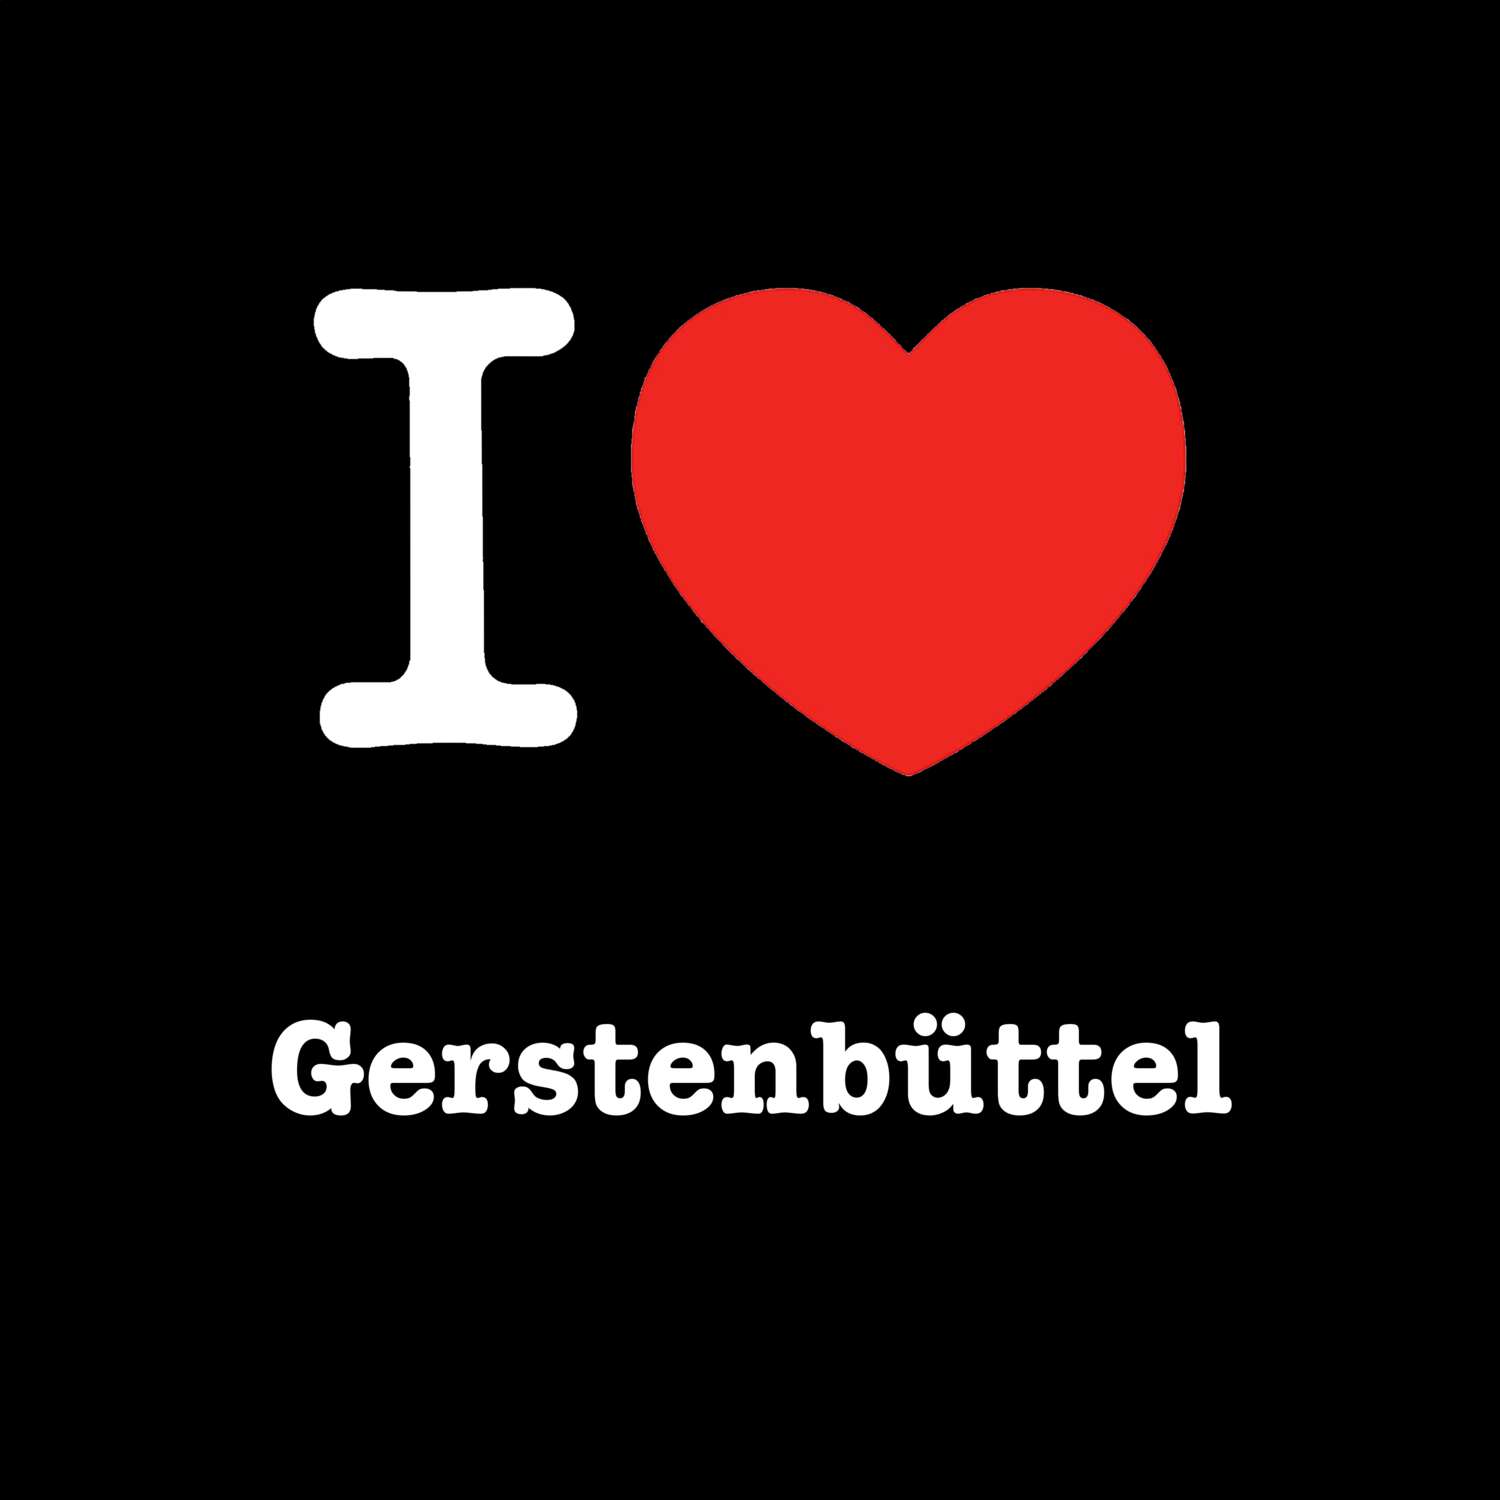 Gerstenbüttel T-Shirt »I love«